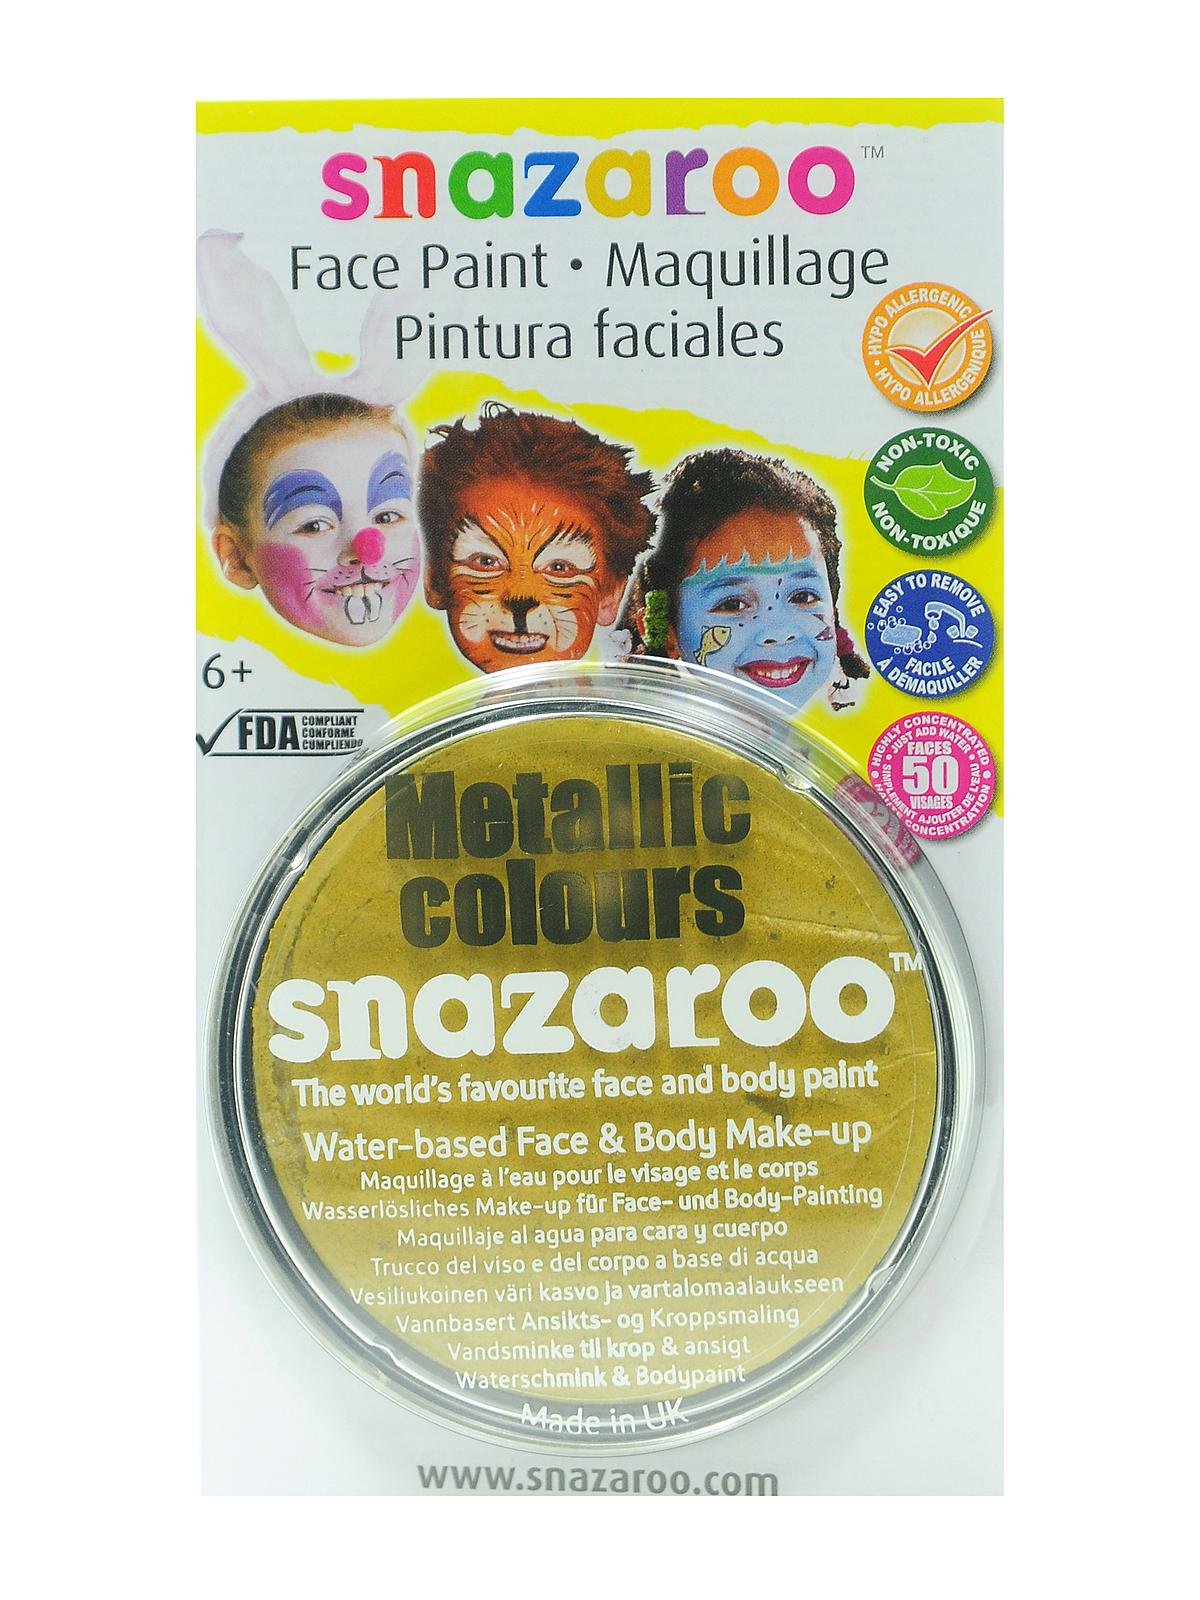 Snazaroo Face and Body Paint 18ml, Face Paint, Snazaroo Face Paint